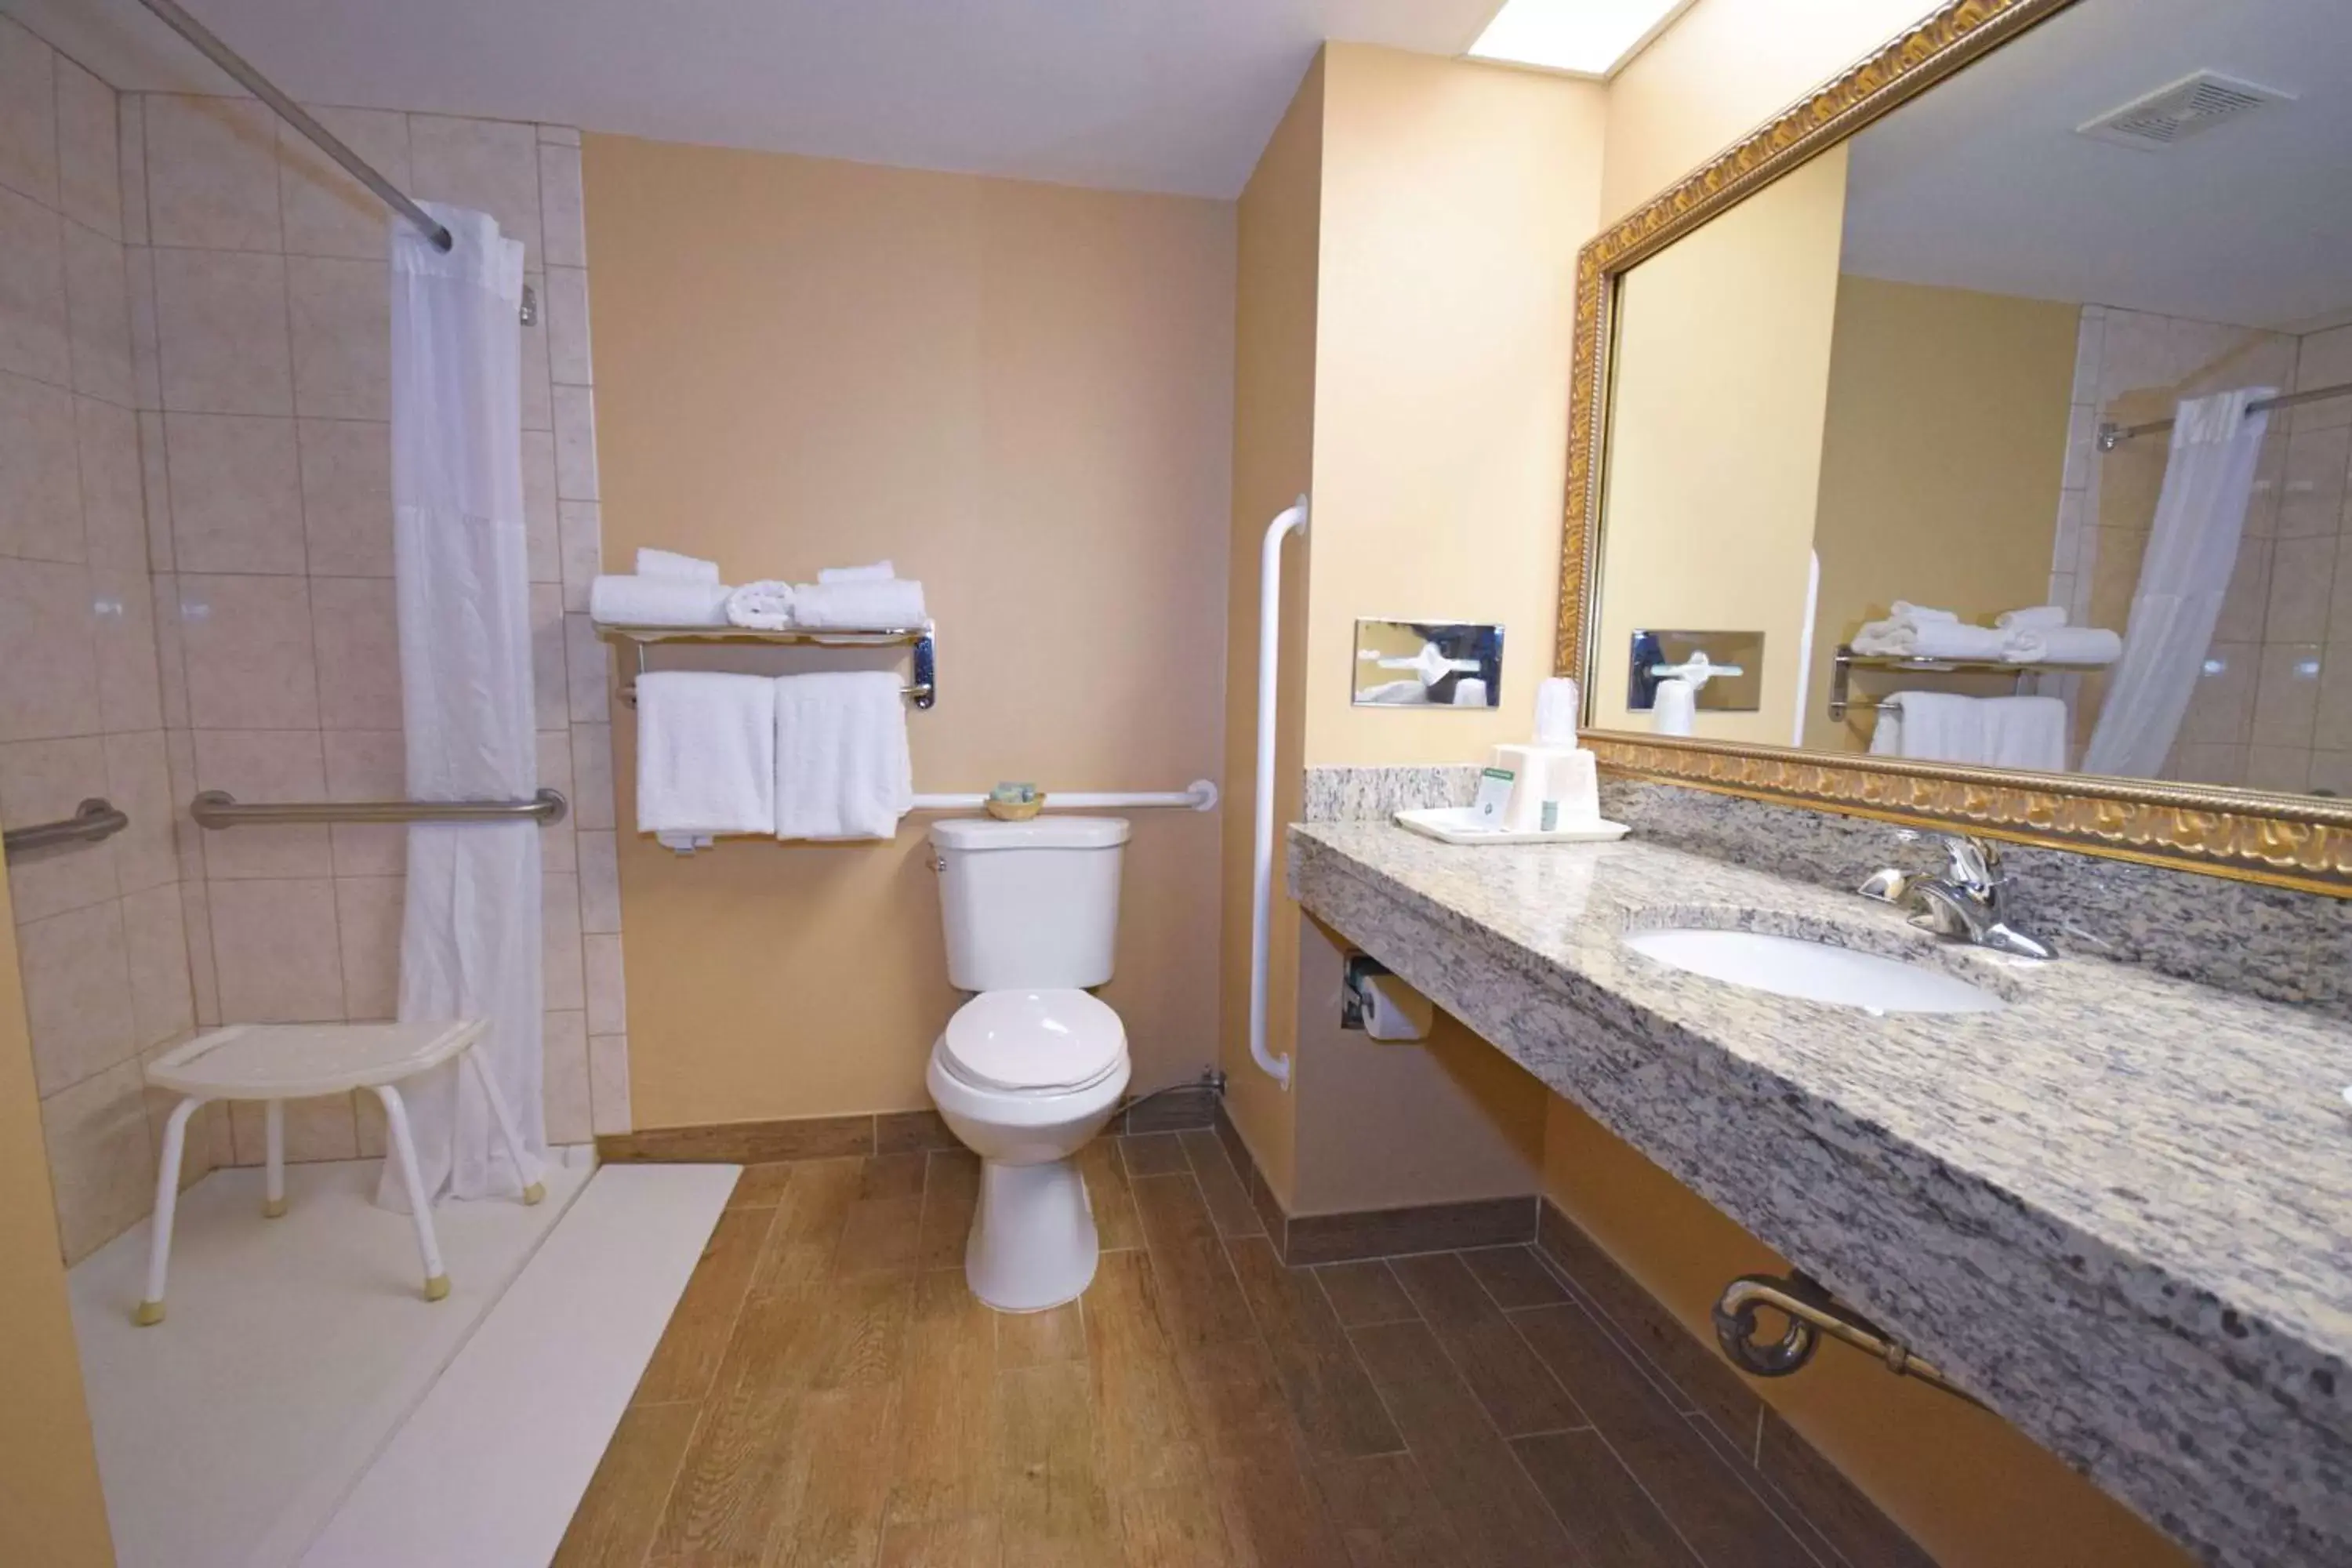 Bathroom in Best Western Resort Hotel & Conference Center Portage